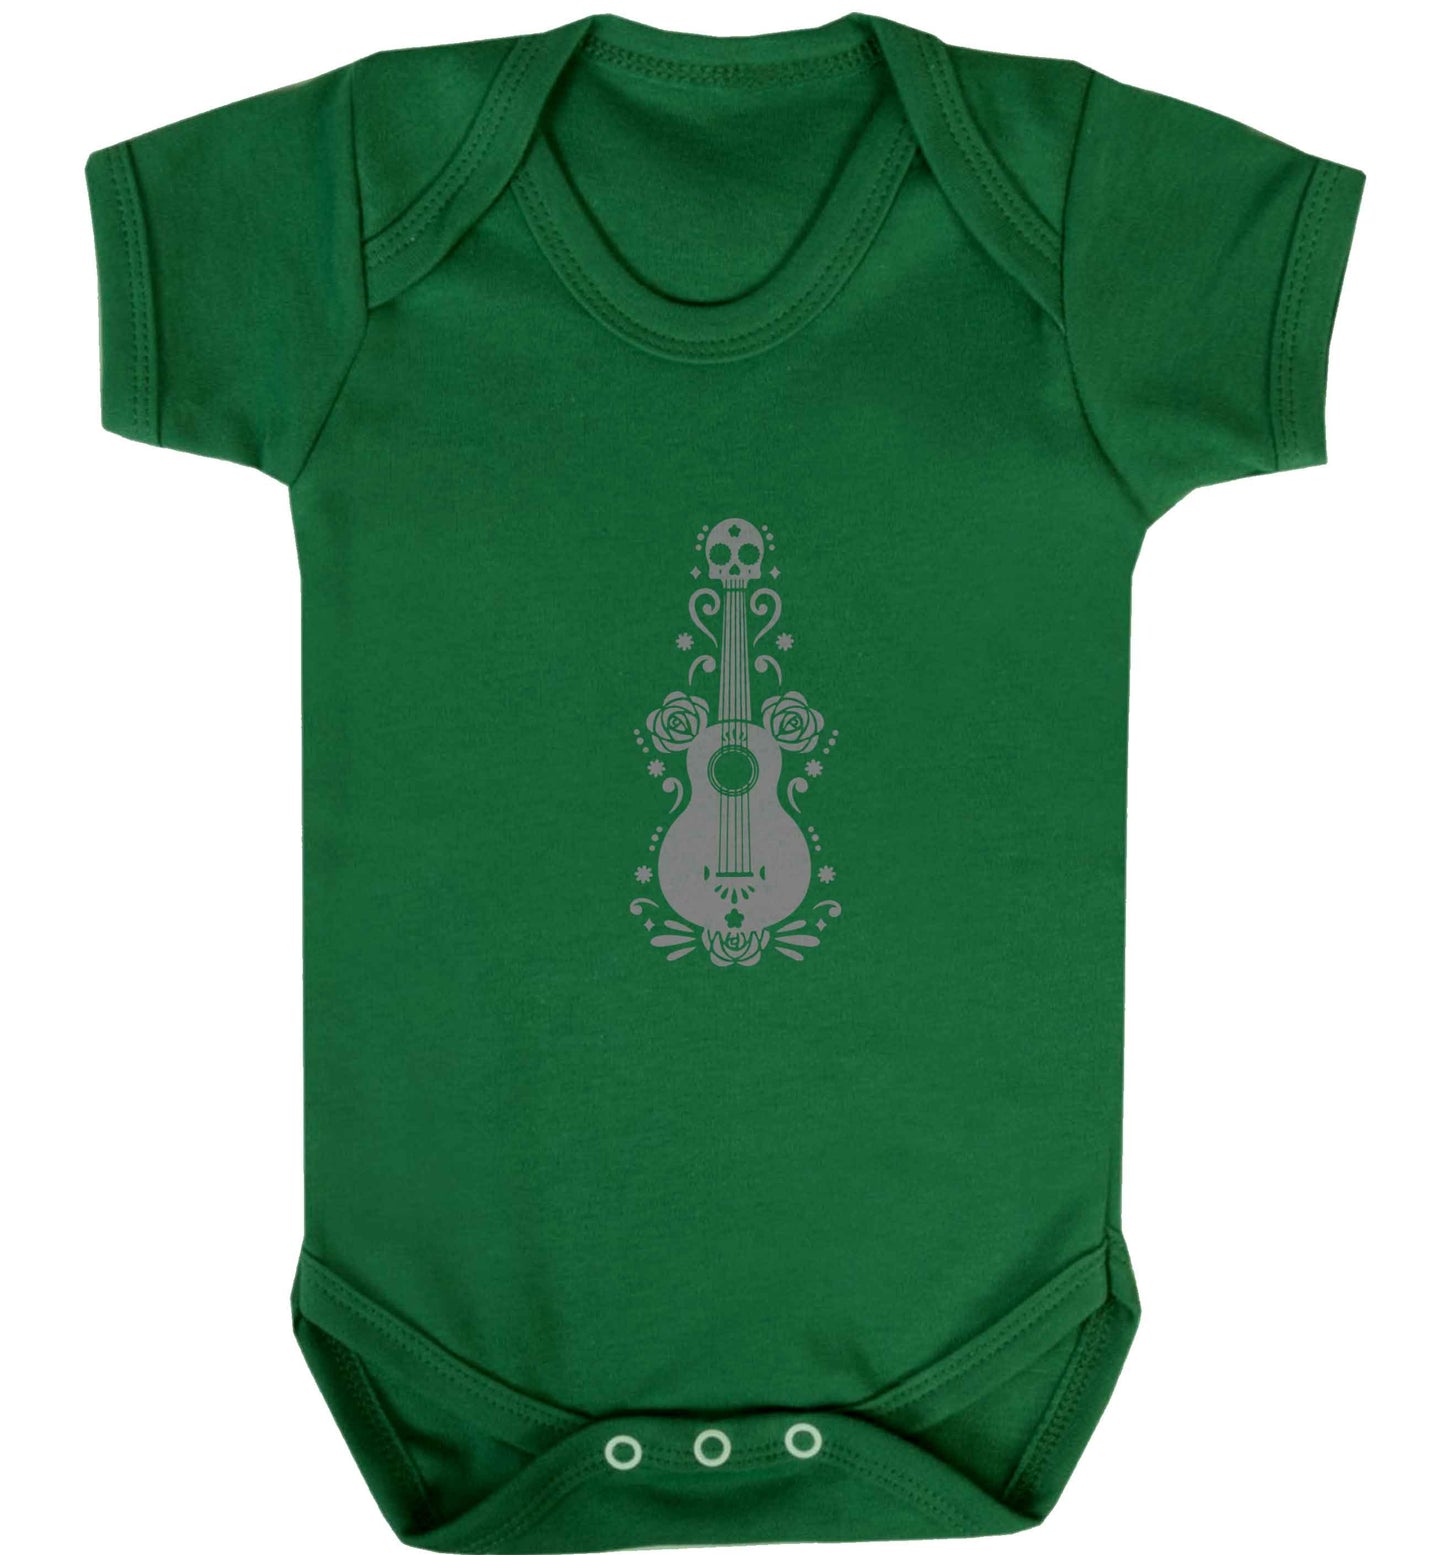 Guitar skull illustration baby vest green 18-24 months